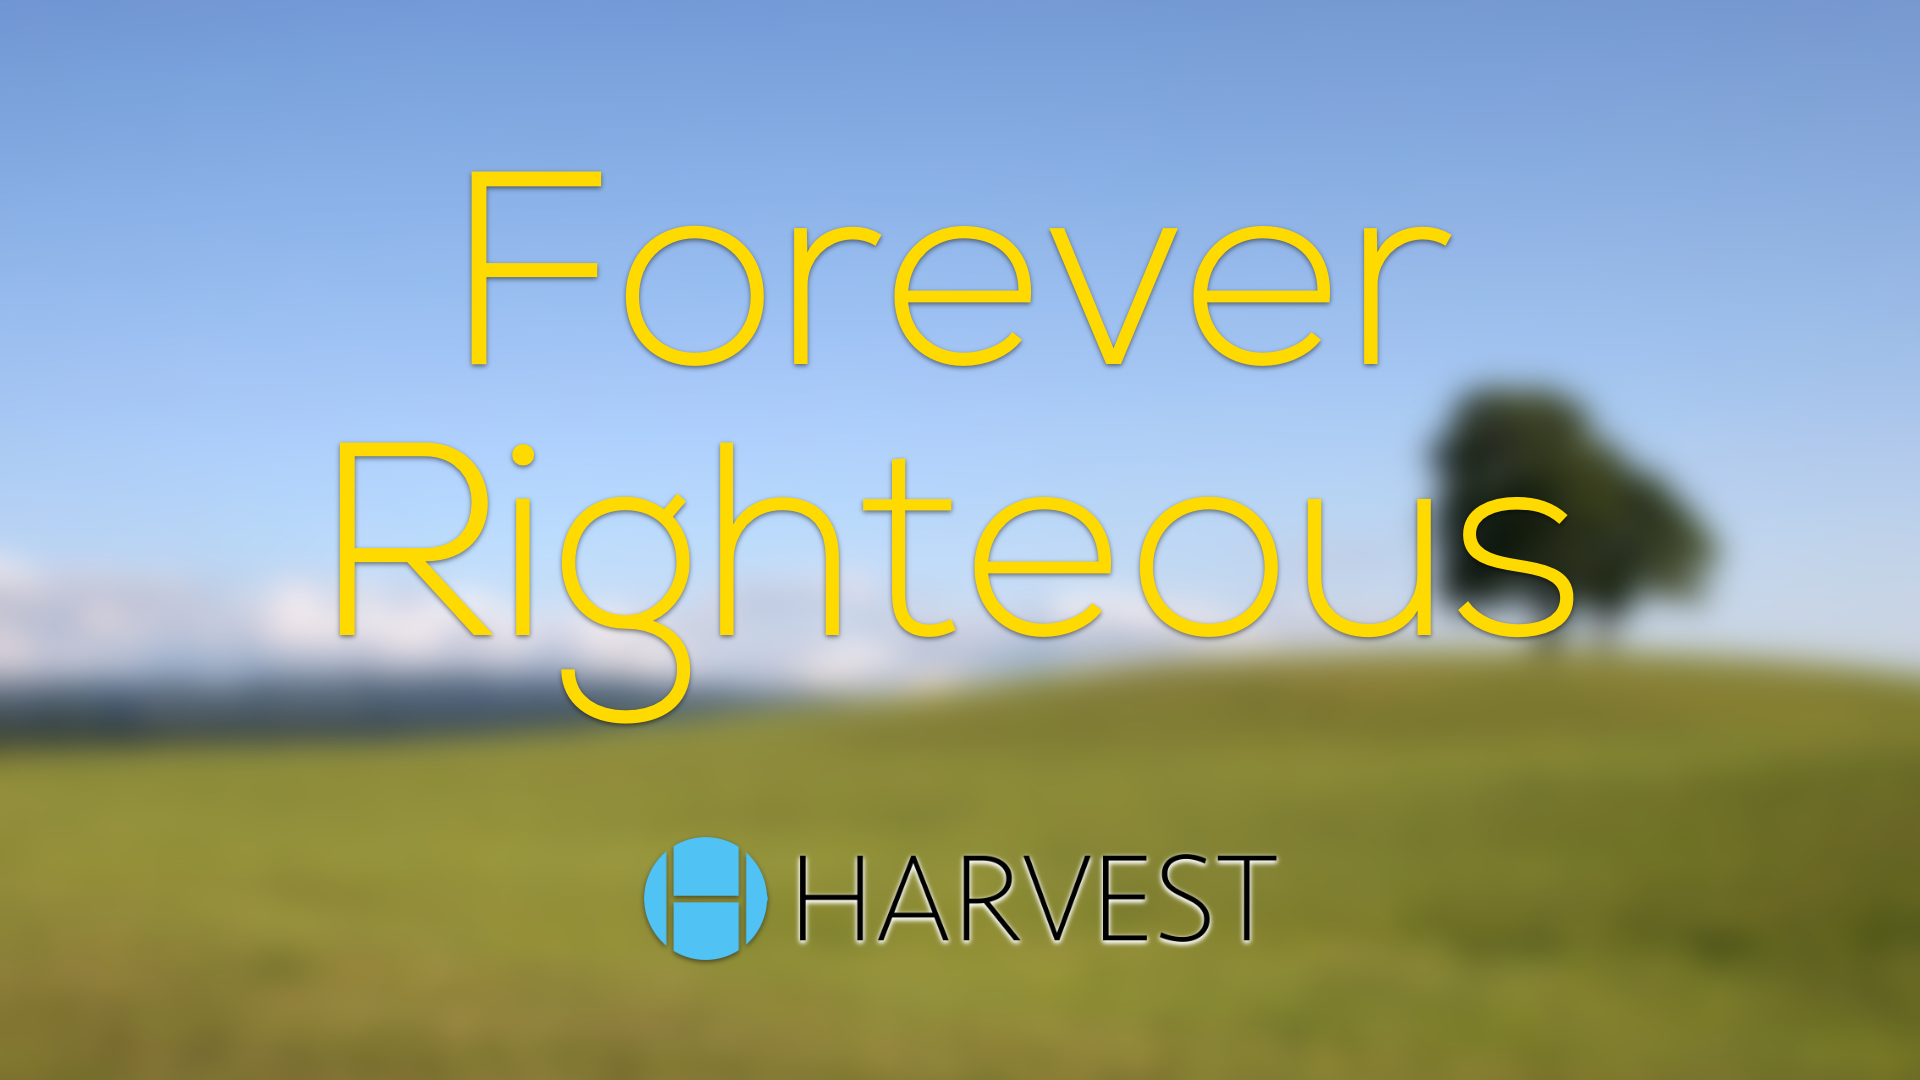 Forever Righteous